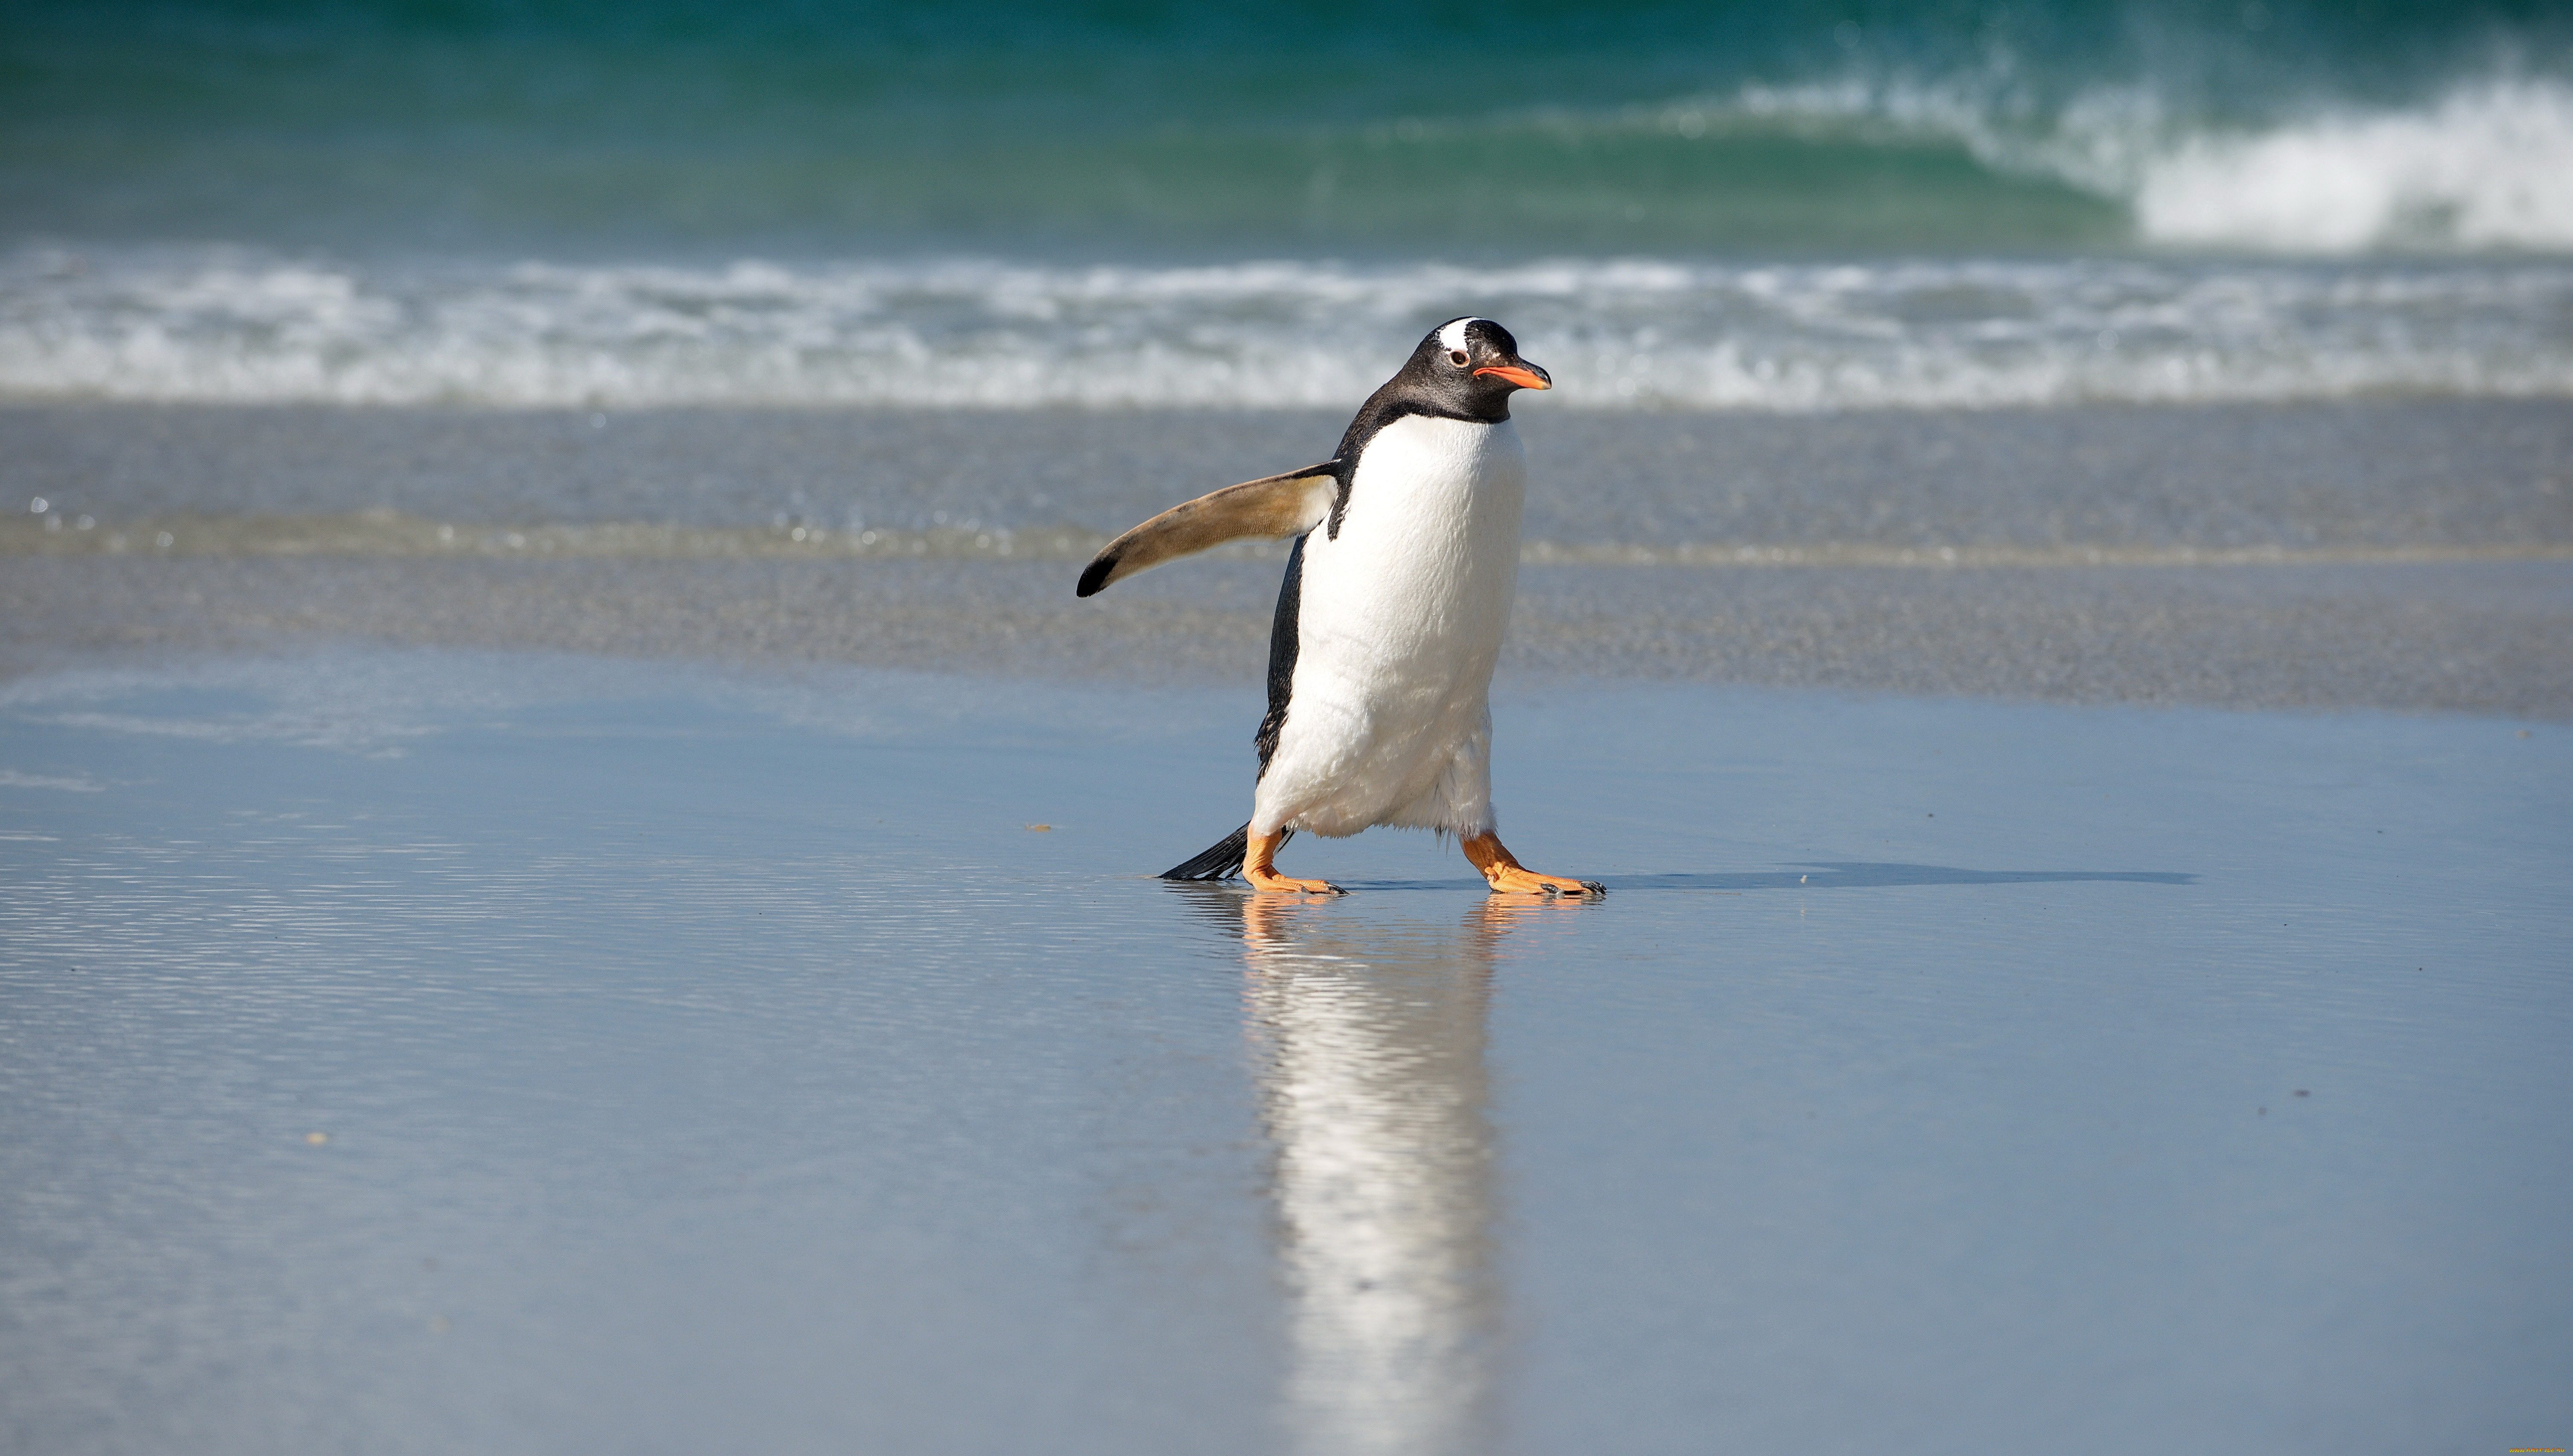 субантарктический, пингвин, животные, пингвины, вода, море, океан